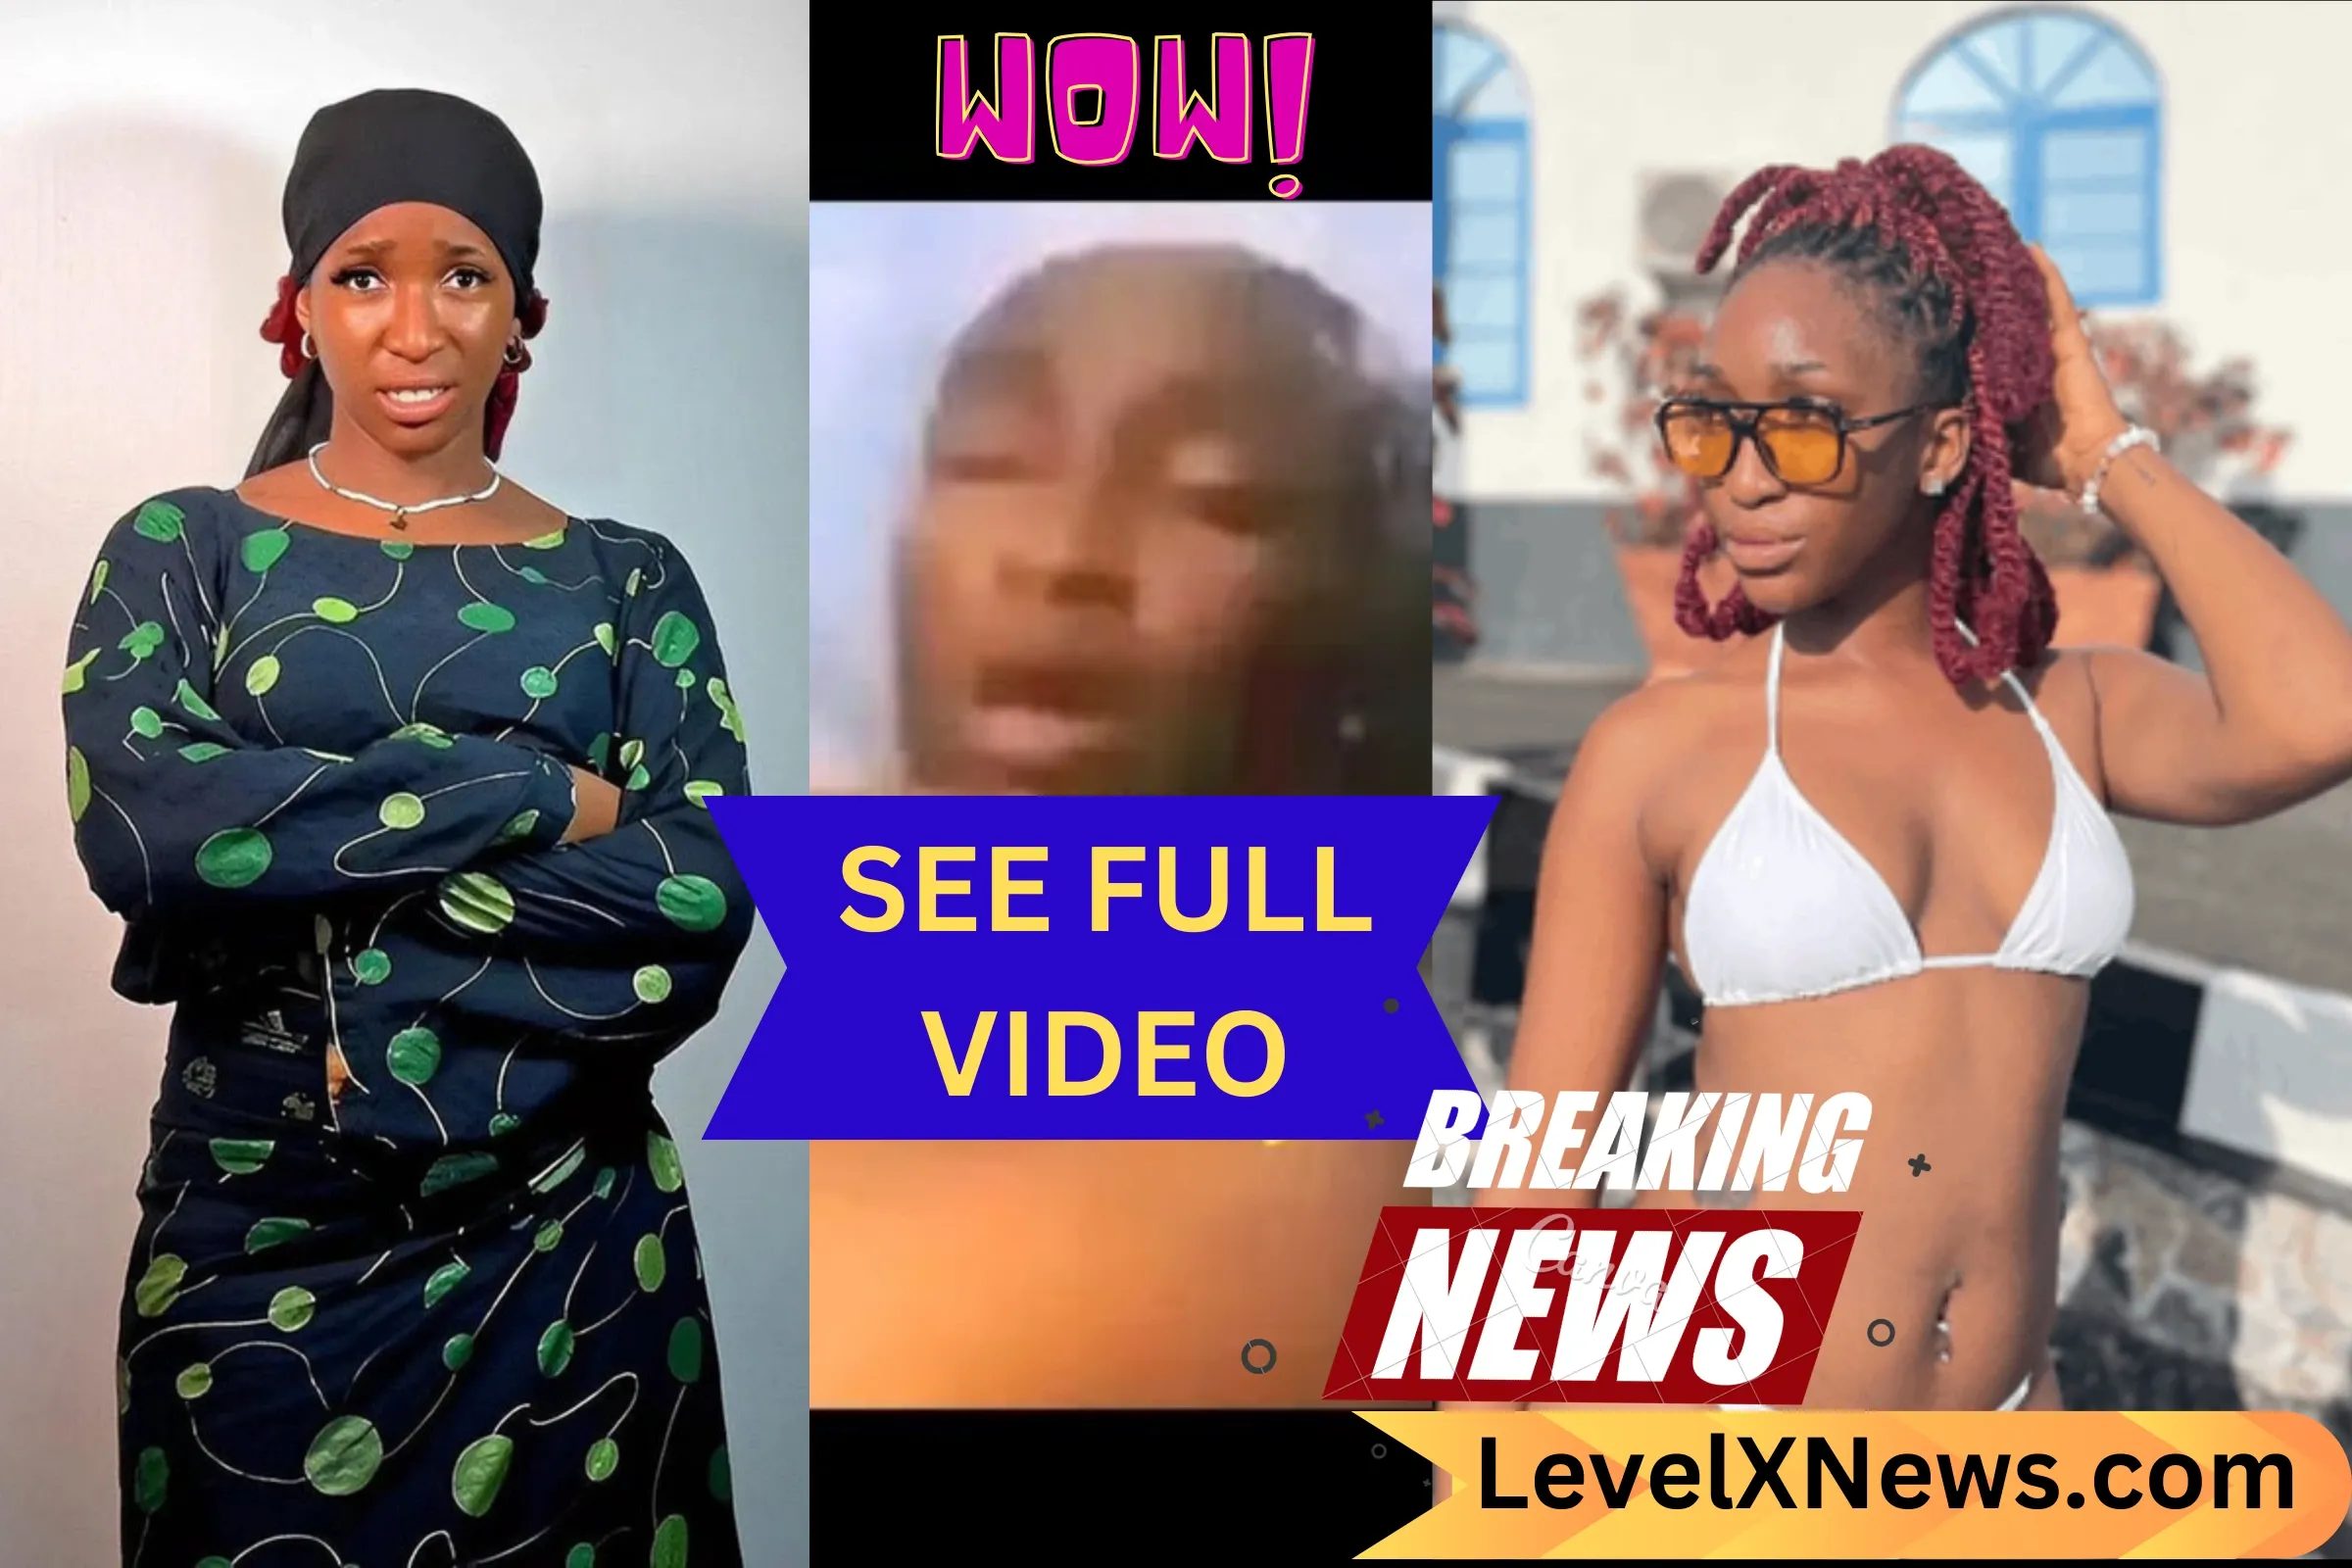 The Buba Girl Leaked Video: How a TikTok Star Became a Viral Sensation Overnight